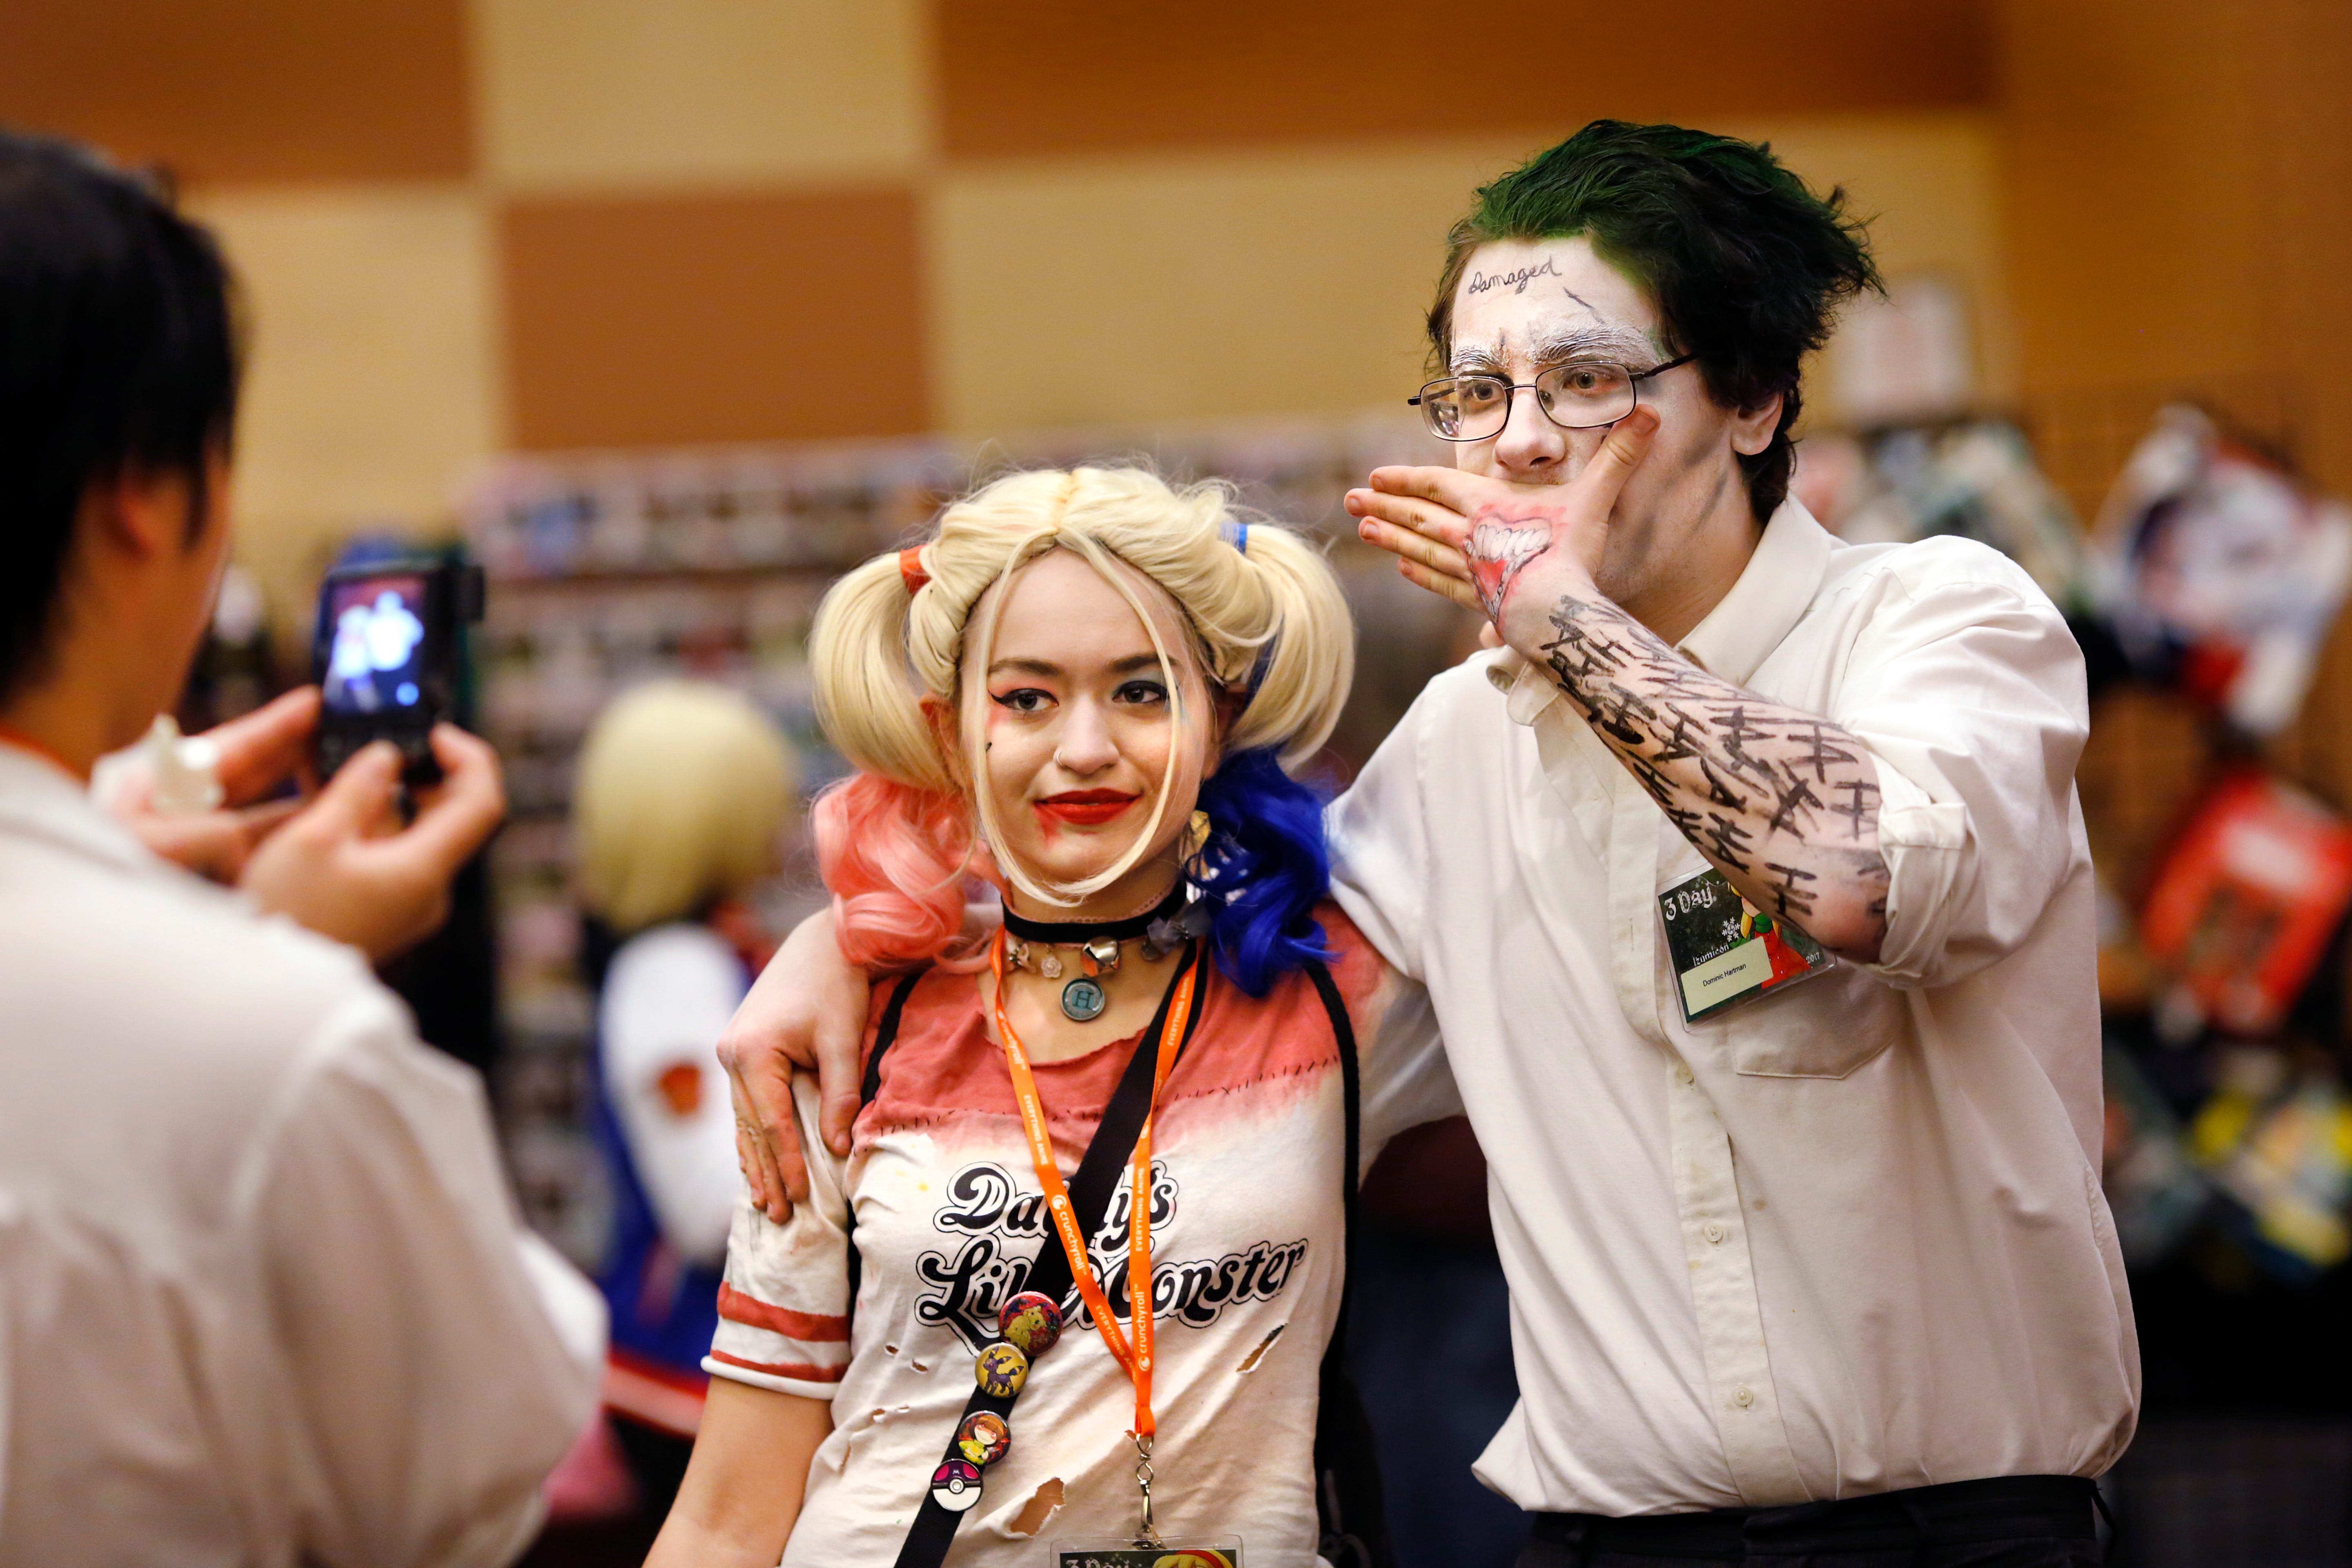 Tokyo OK Anime Convention Kicks Off In Downtown Tulsa